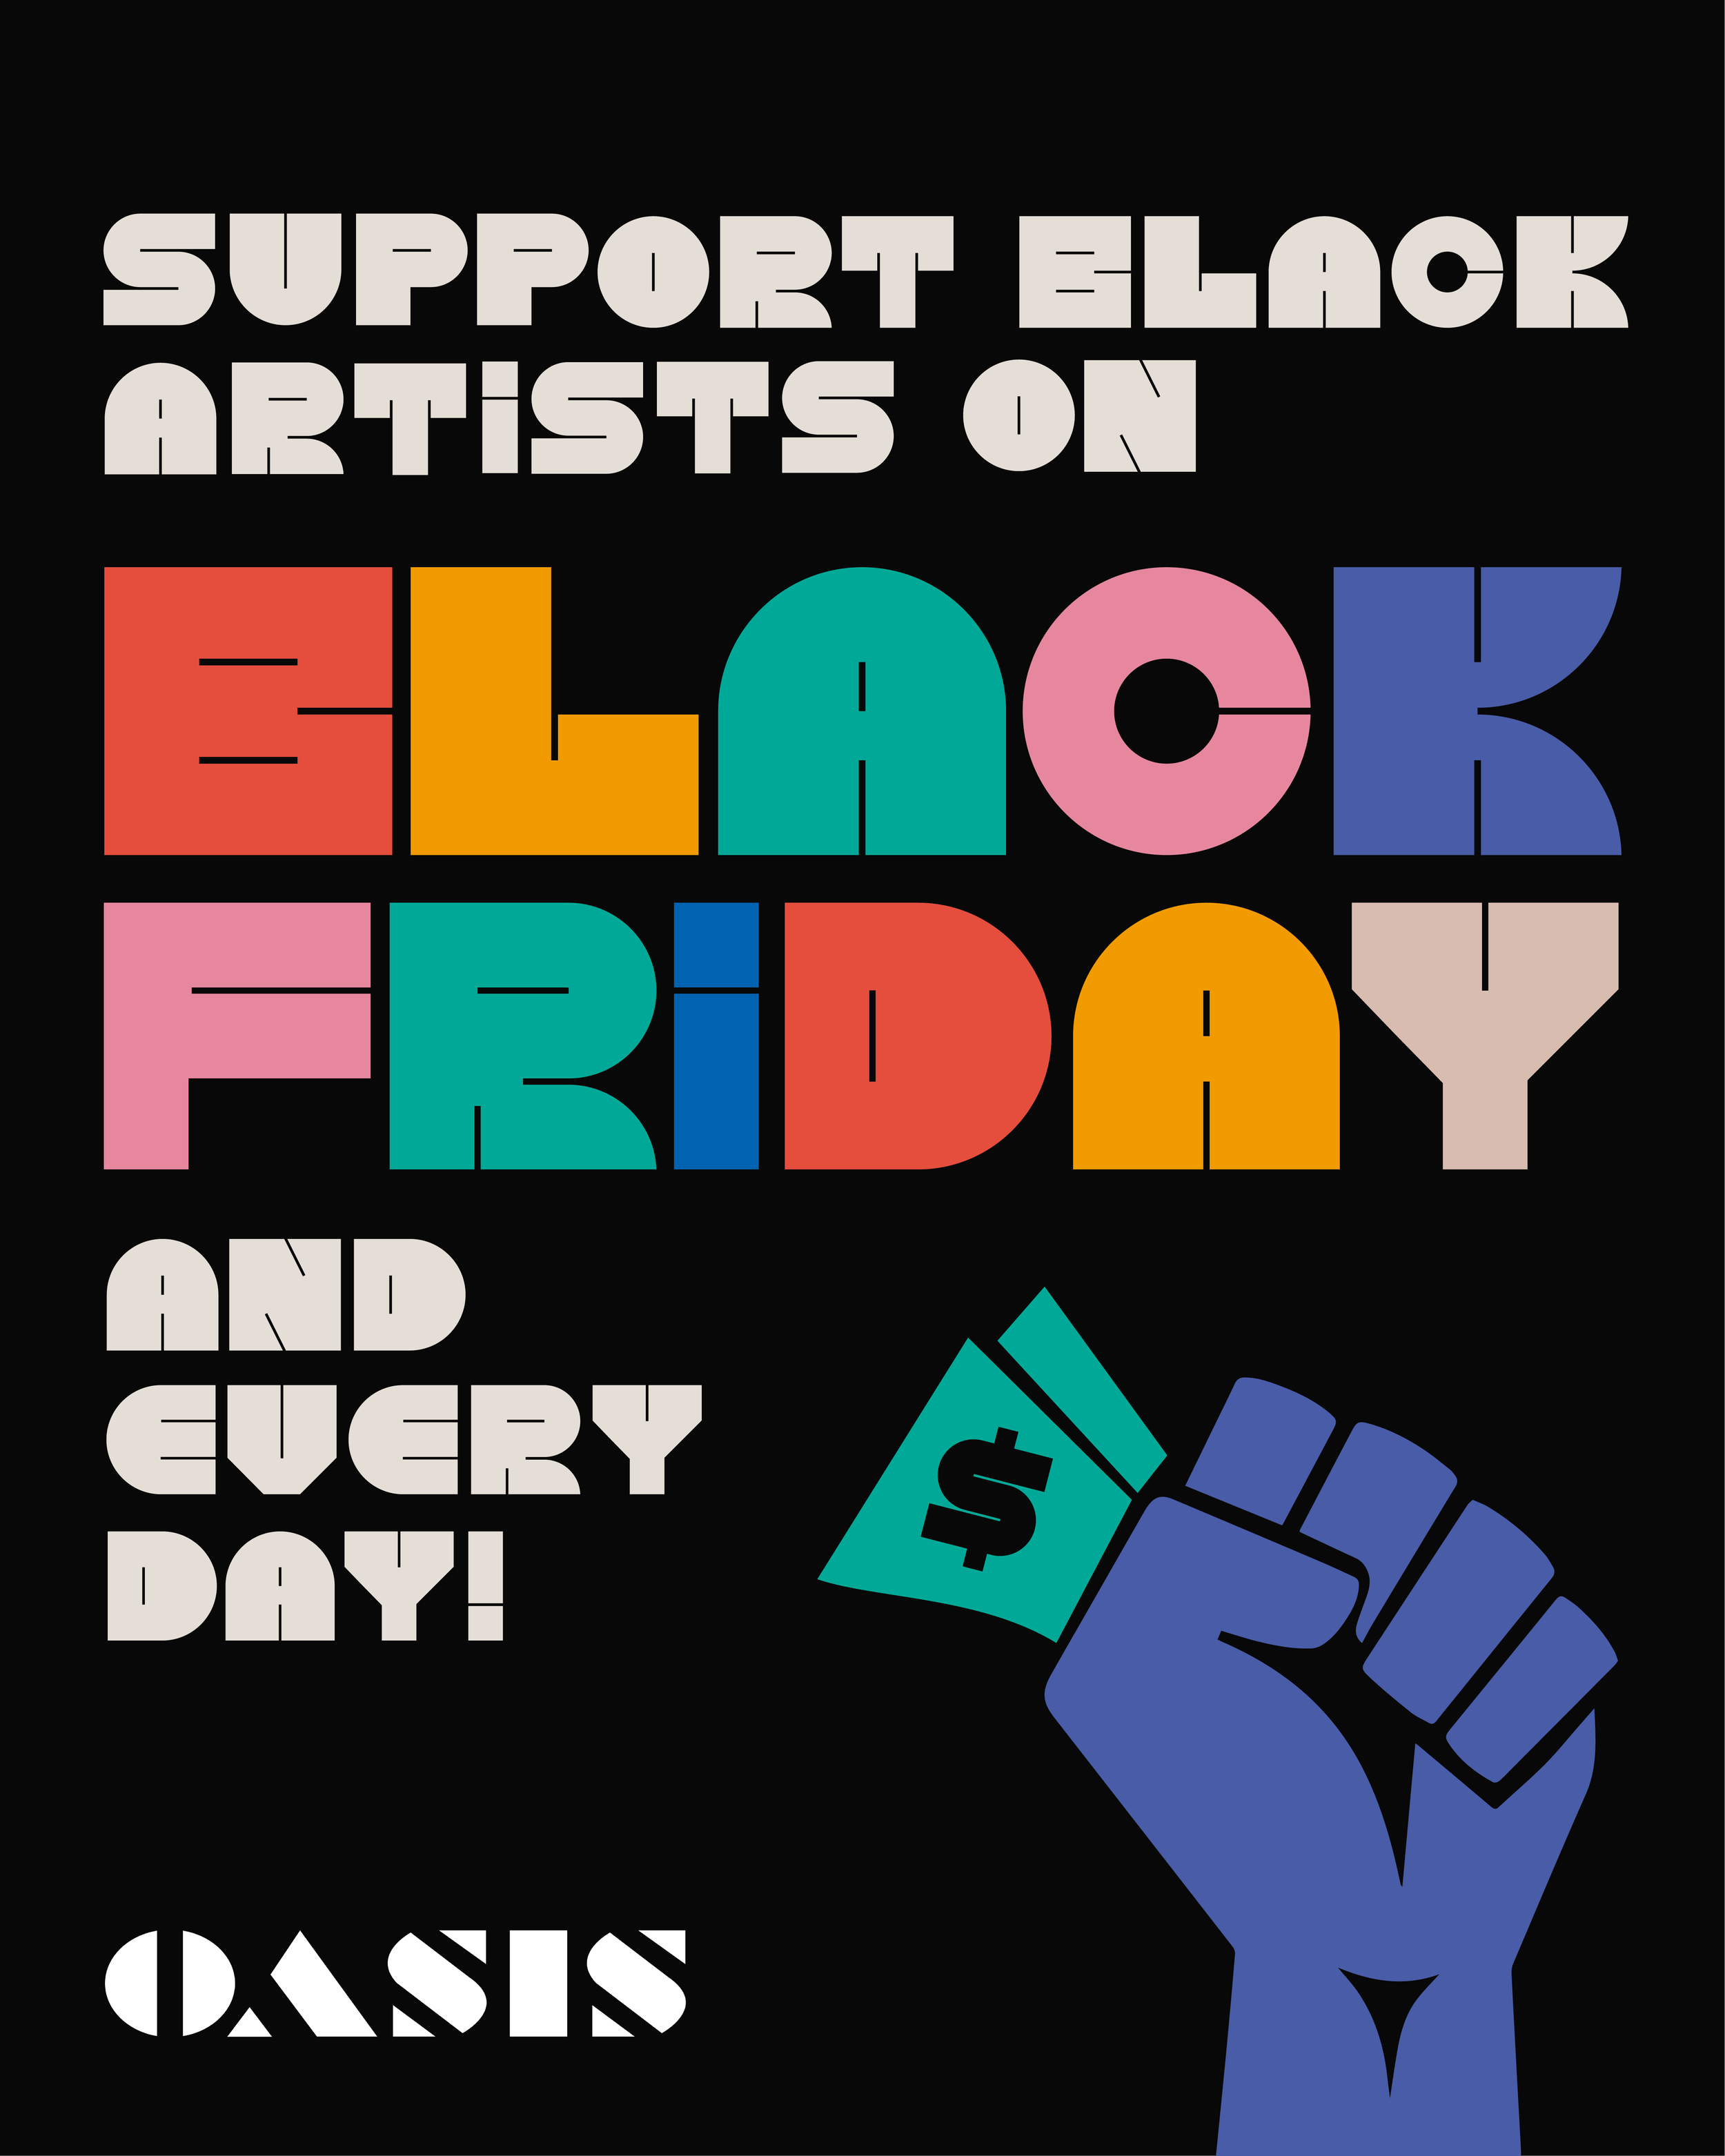 Support Black Artists on Black Friday!